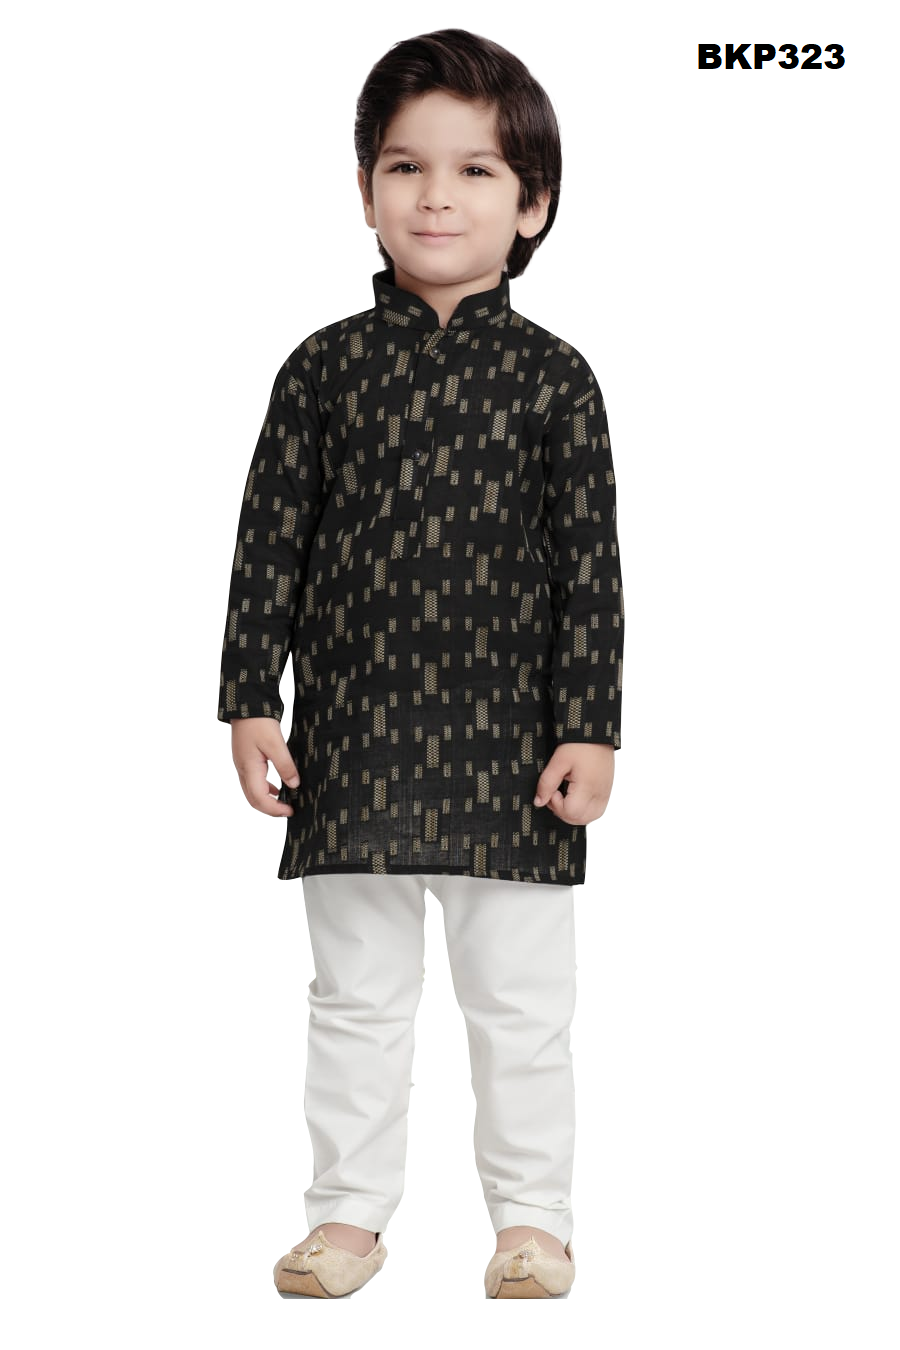 BKP323 - Black and white thread weave cotton kurta pajama set